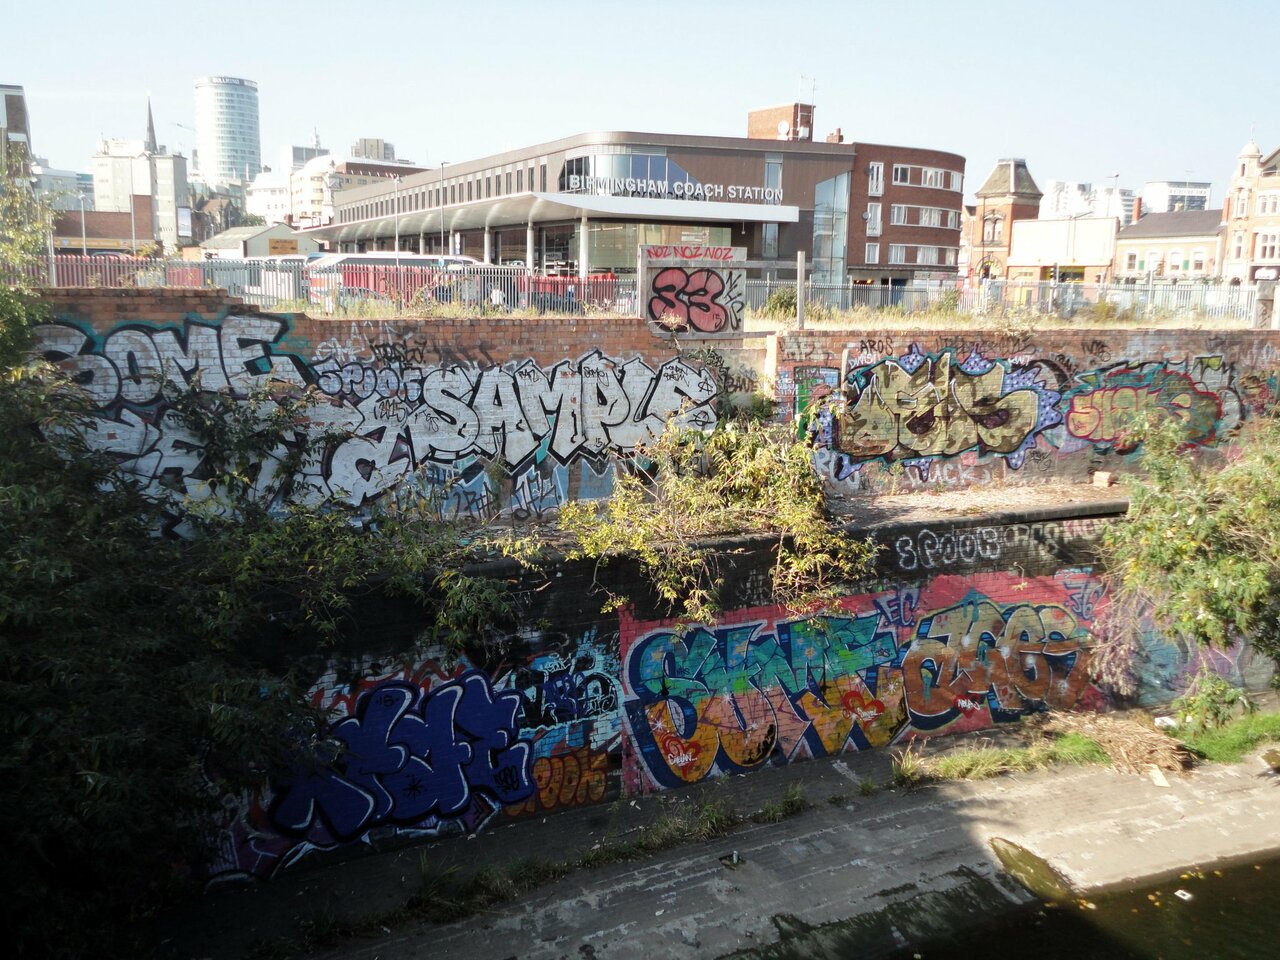 River Rea running through #Digbeth ft. a who's who of writers

#graffiti #graff #Birmingham #art #arte #streetart http://t.co/74Dx03mevs